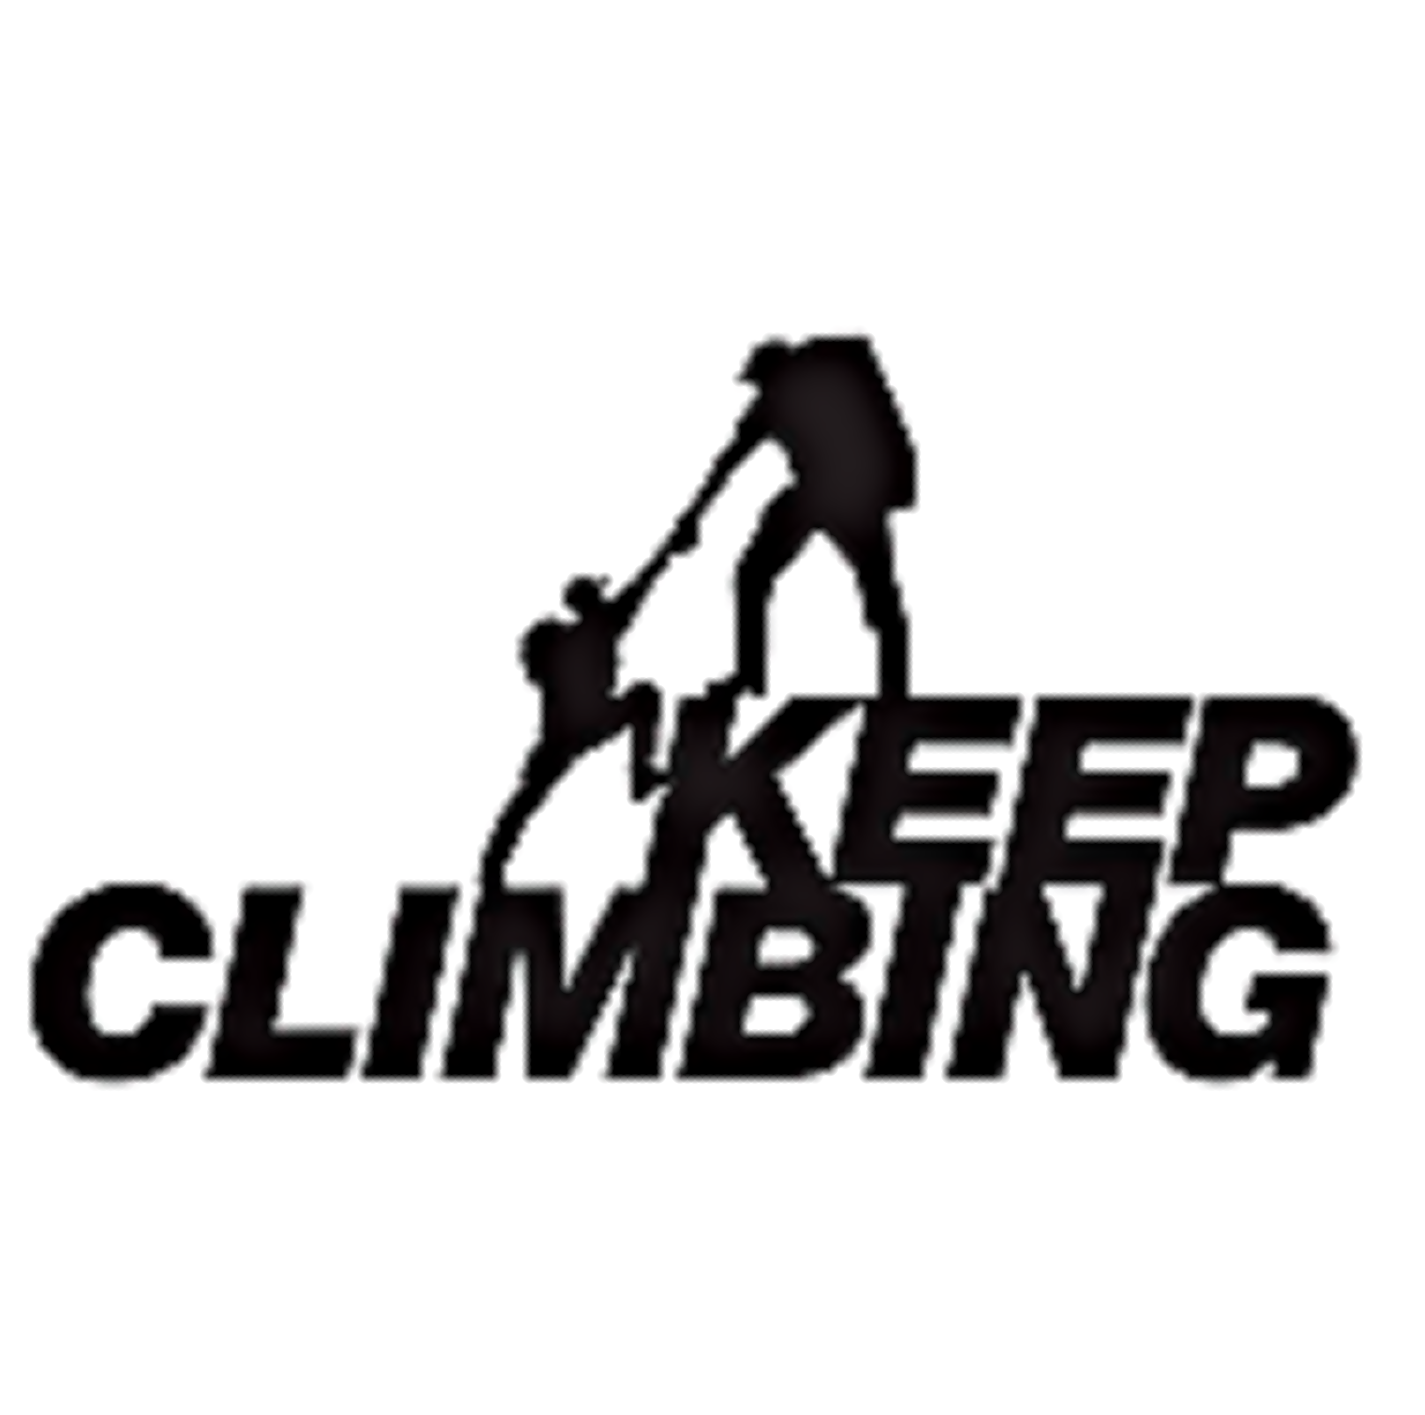 Sunday Sermon: Keep Climbing